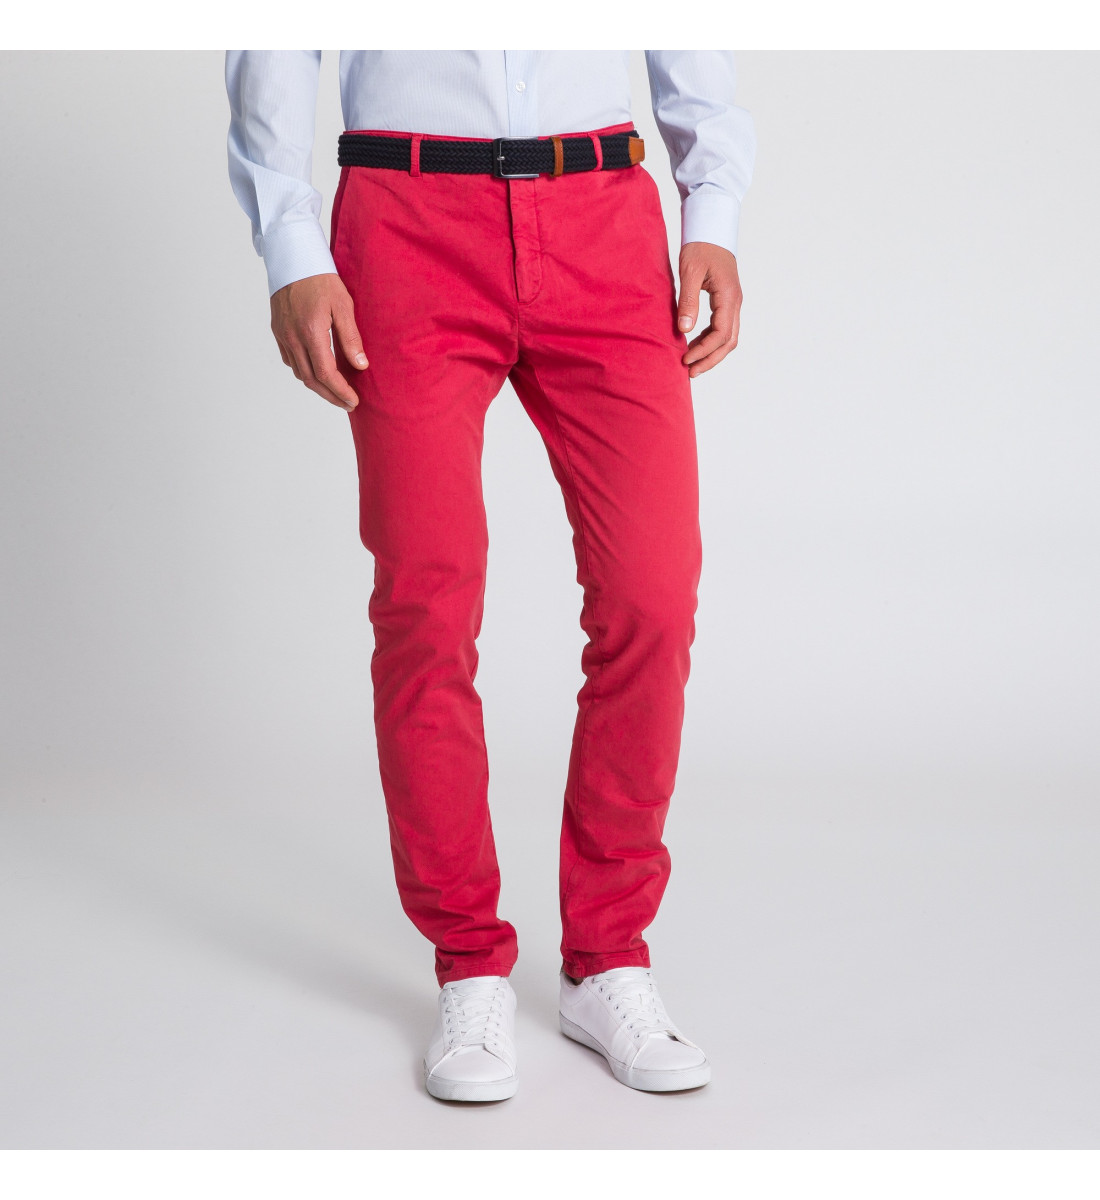 https://www.atelierprive.com/18575-large_default/pantalon-chino-homme-rouge.jpg